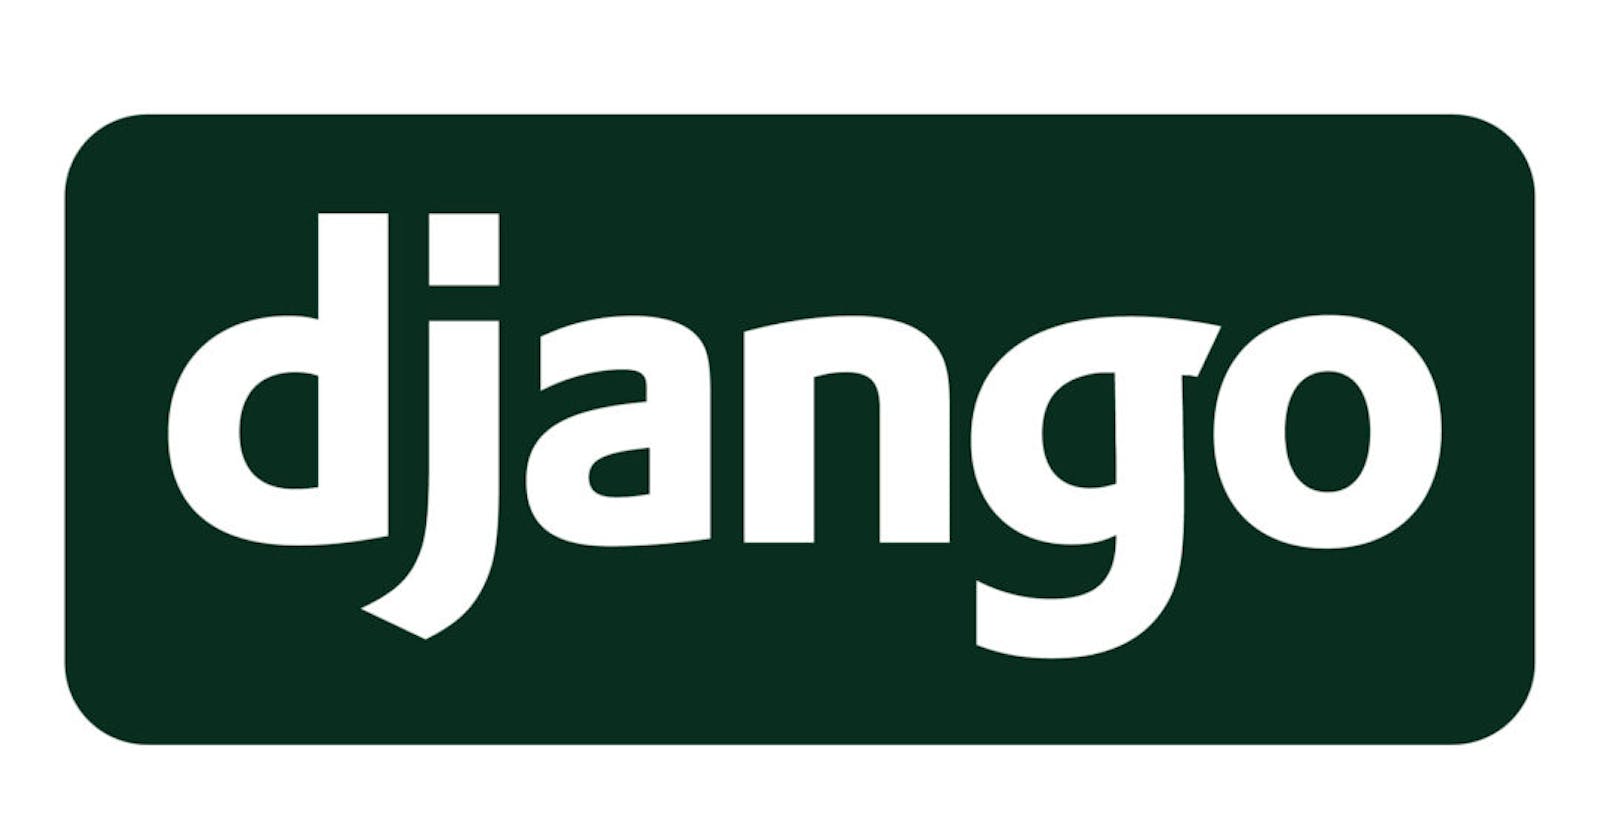 Expenses Tracker App using Django and Pandas.